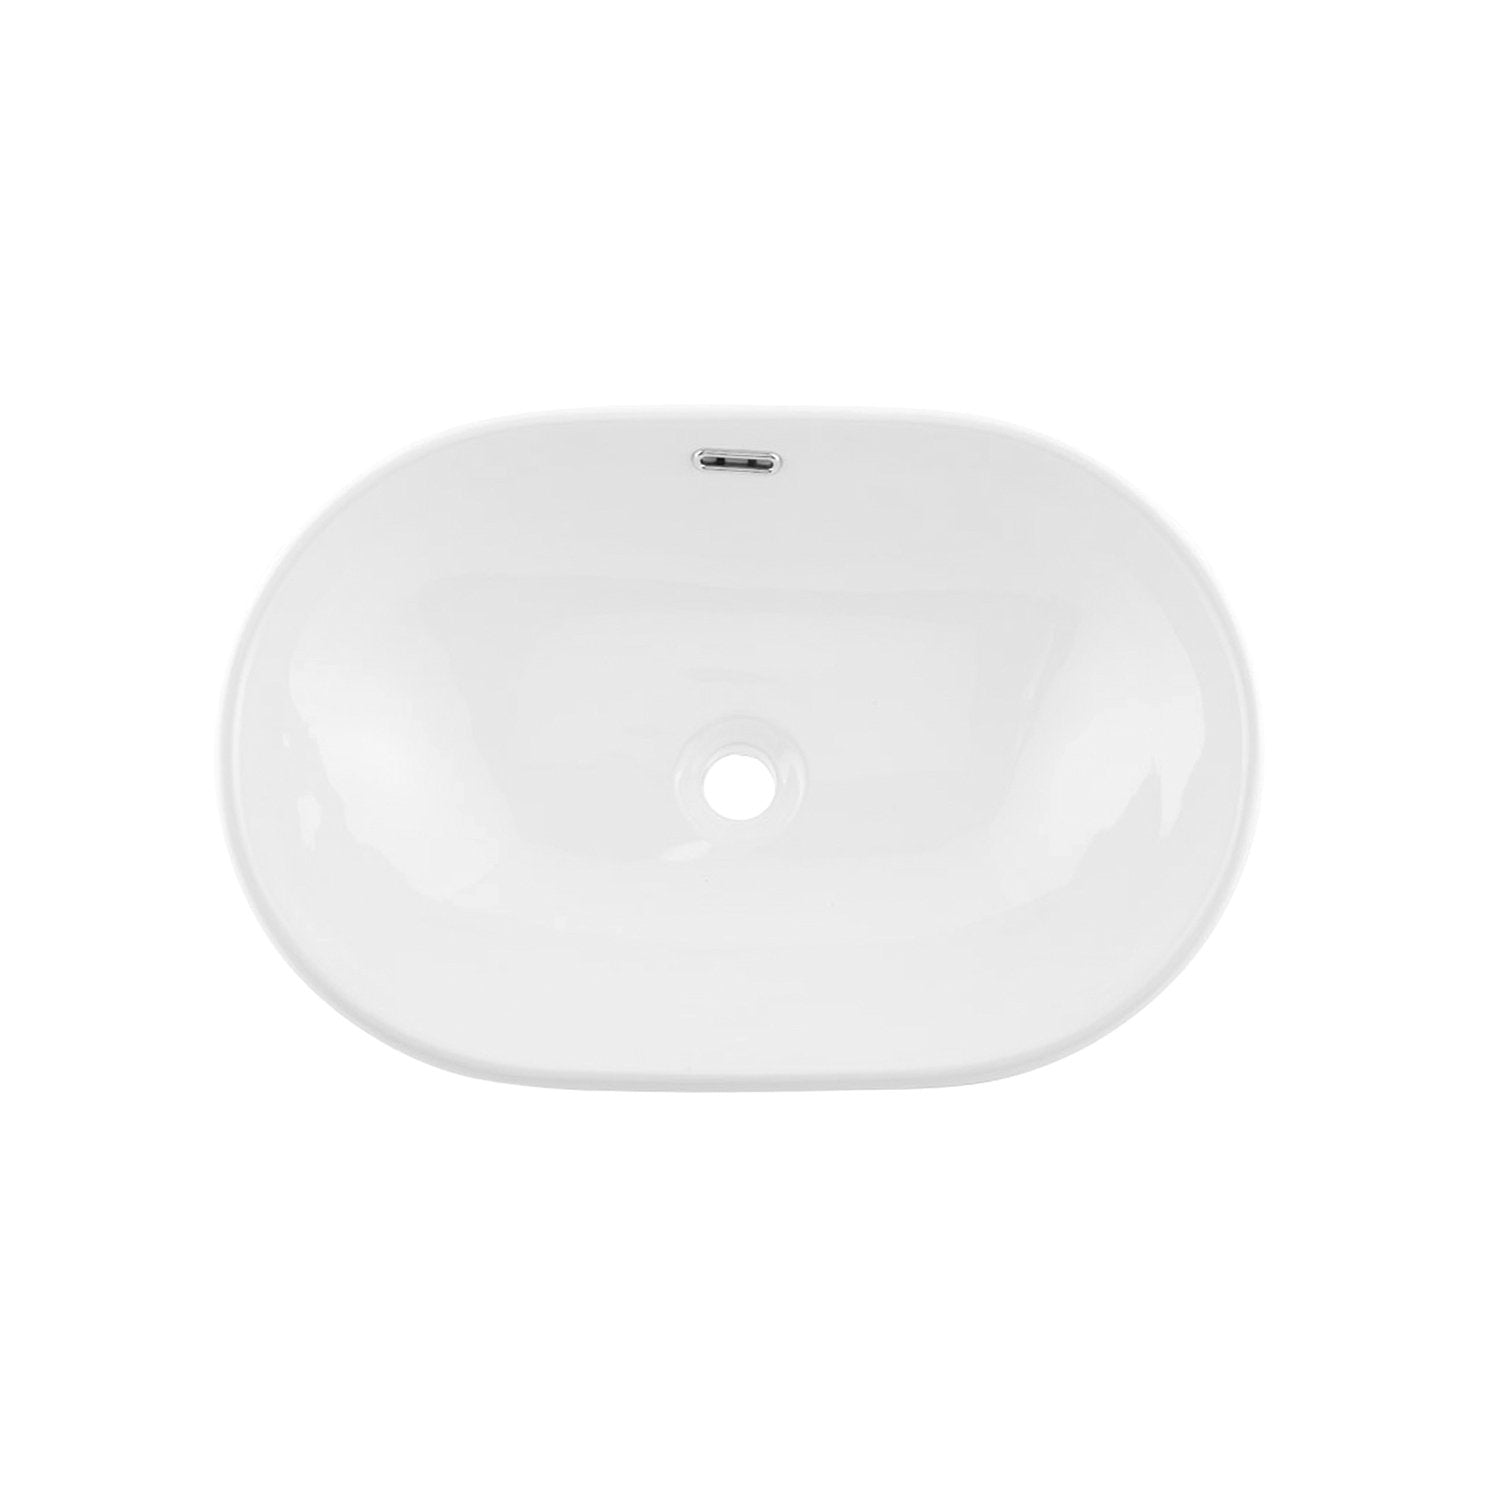 DAX Ceramic Oval Single Bowl Bathroom Vessel Sink, White Finish,  23 x 15-1/2 x 7 Inches (BSN-243C)